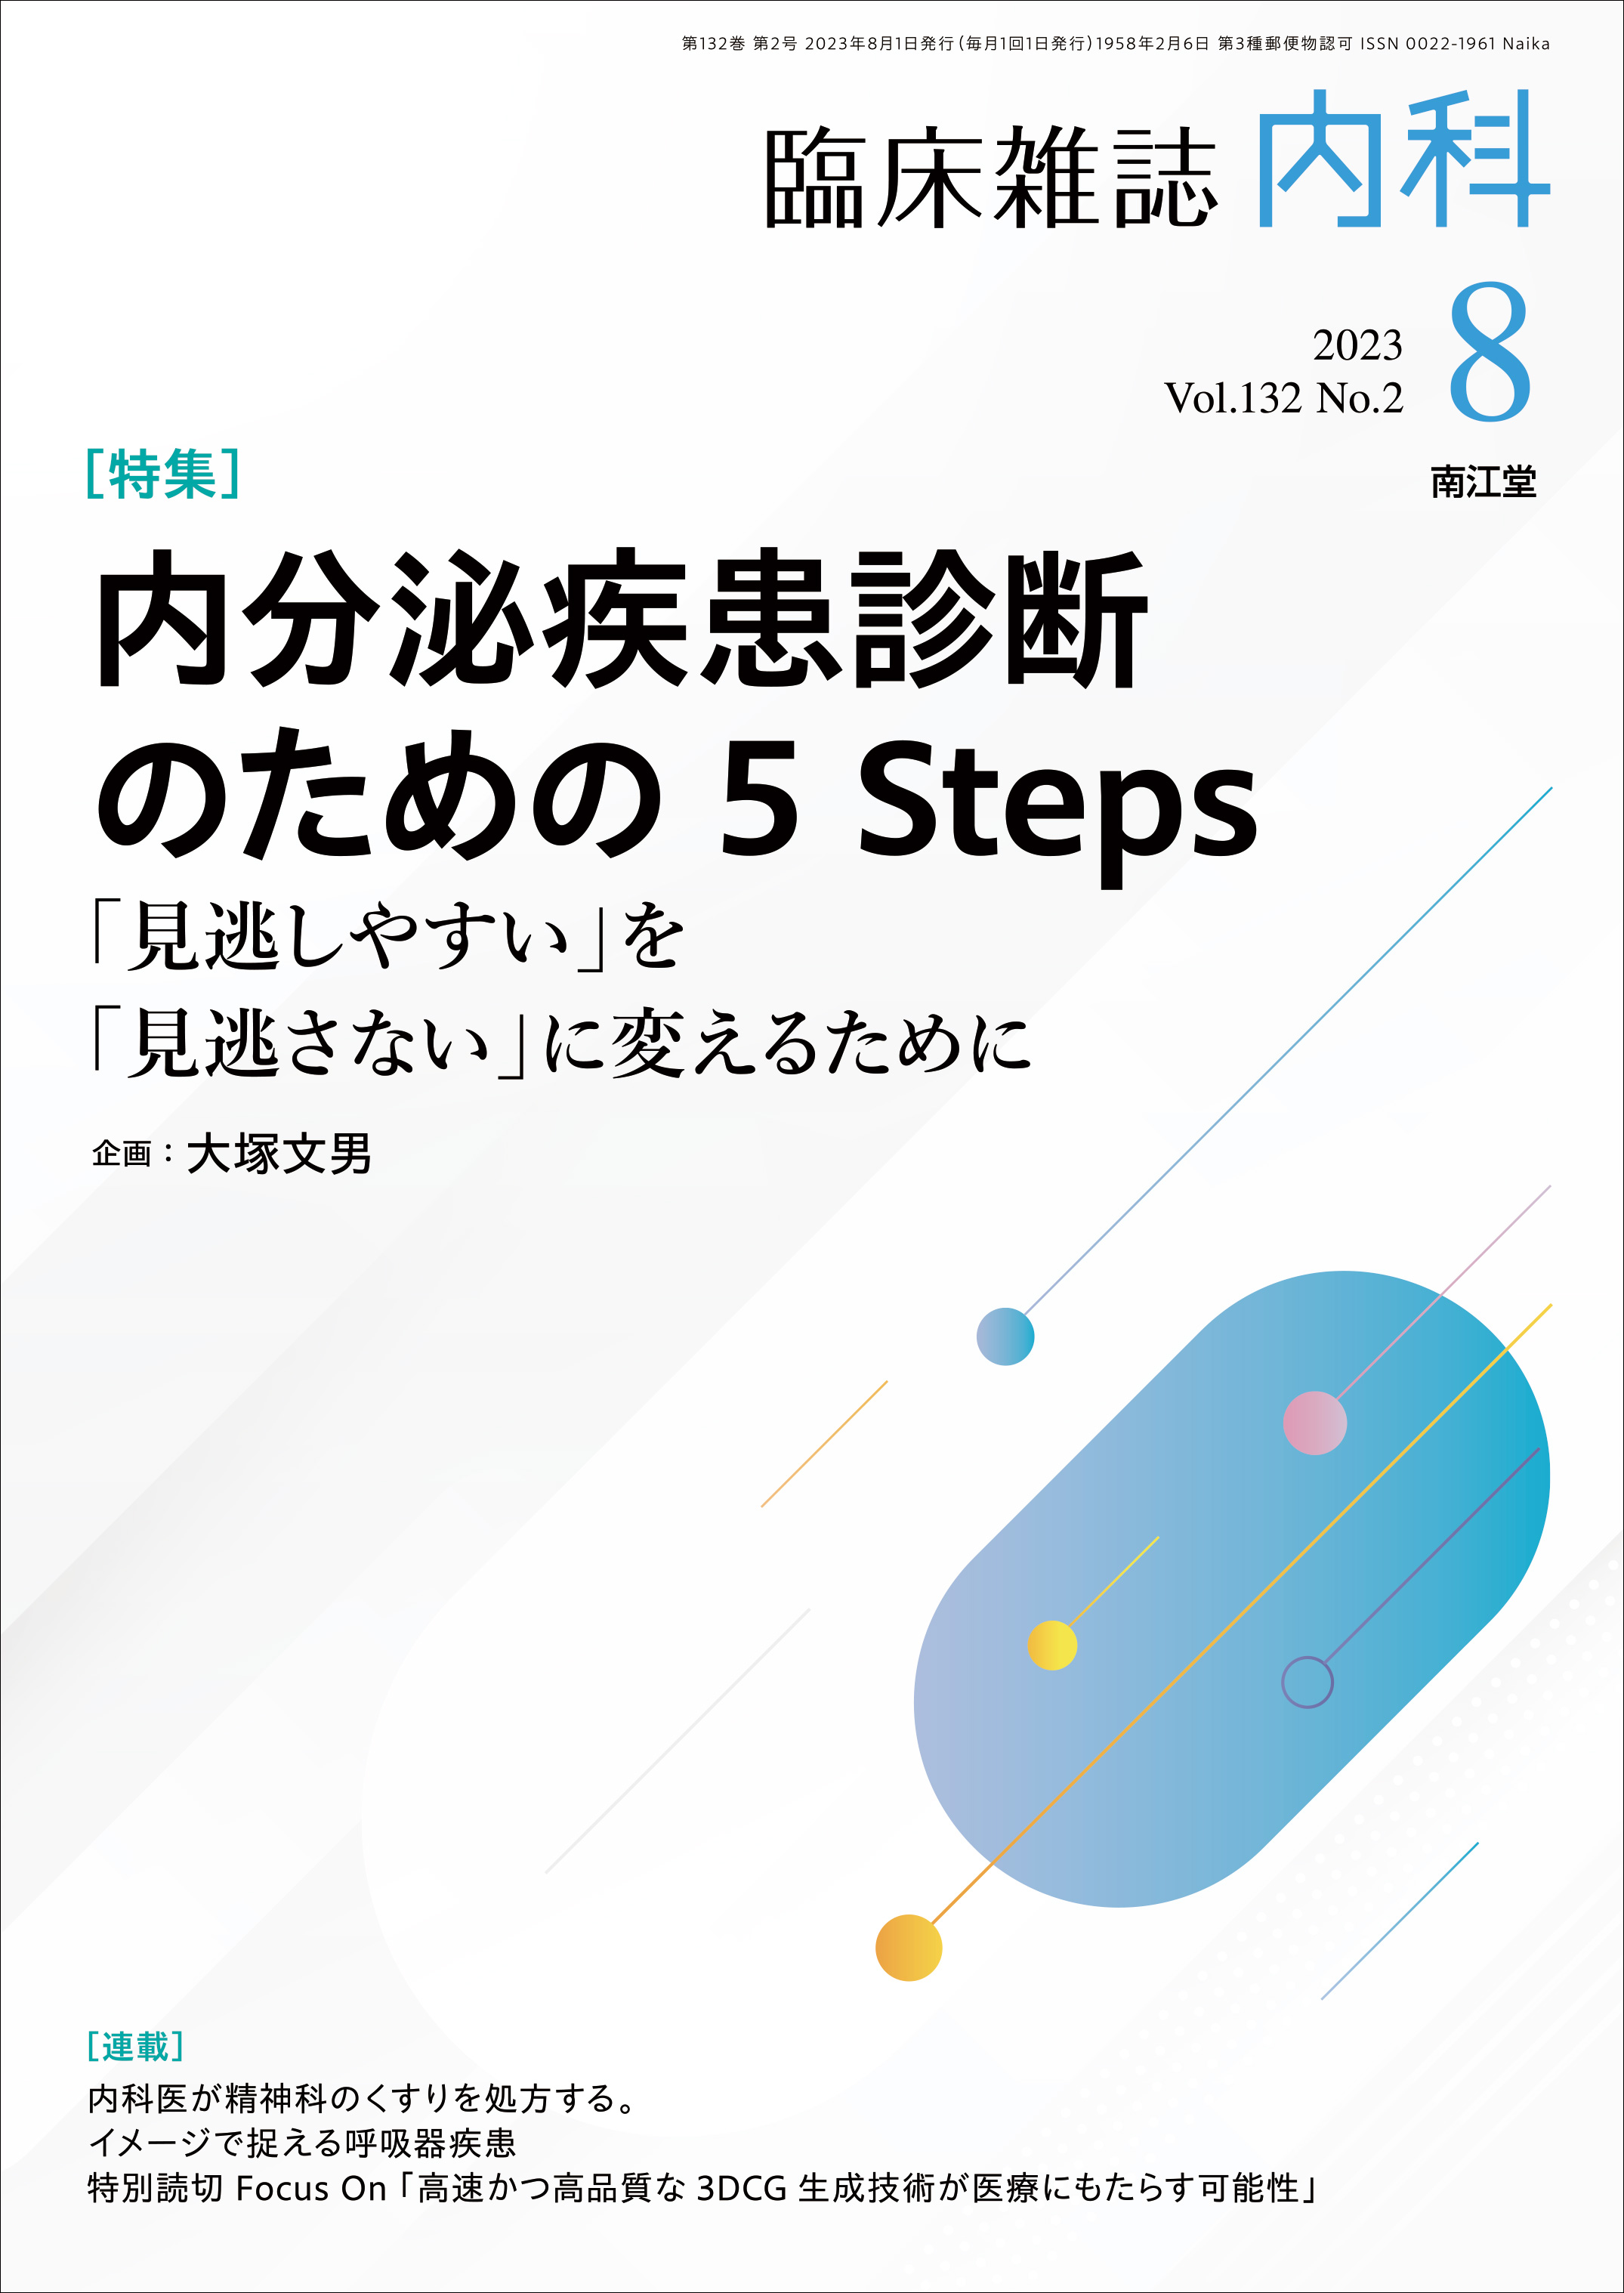 厾ff̂߂ 5 Steps(Vol.132 No.2)2023N8